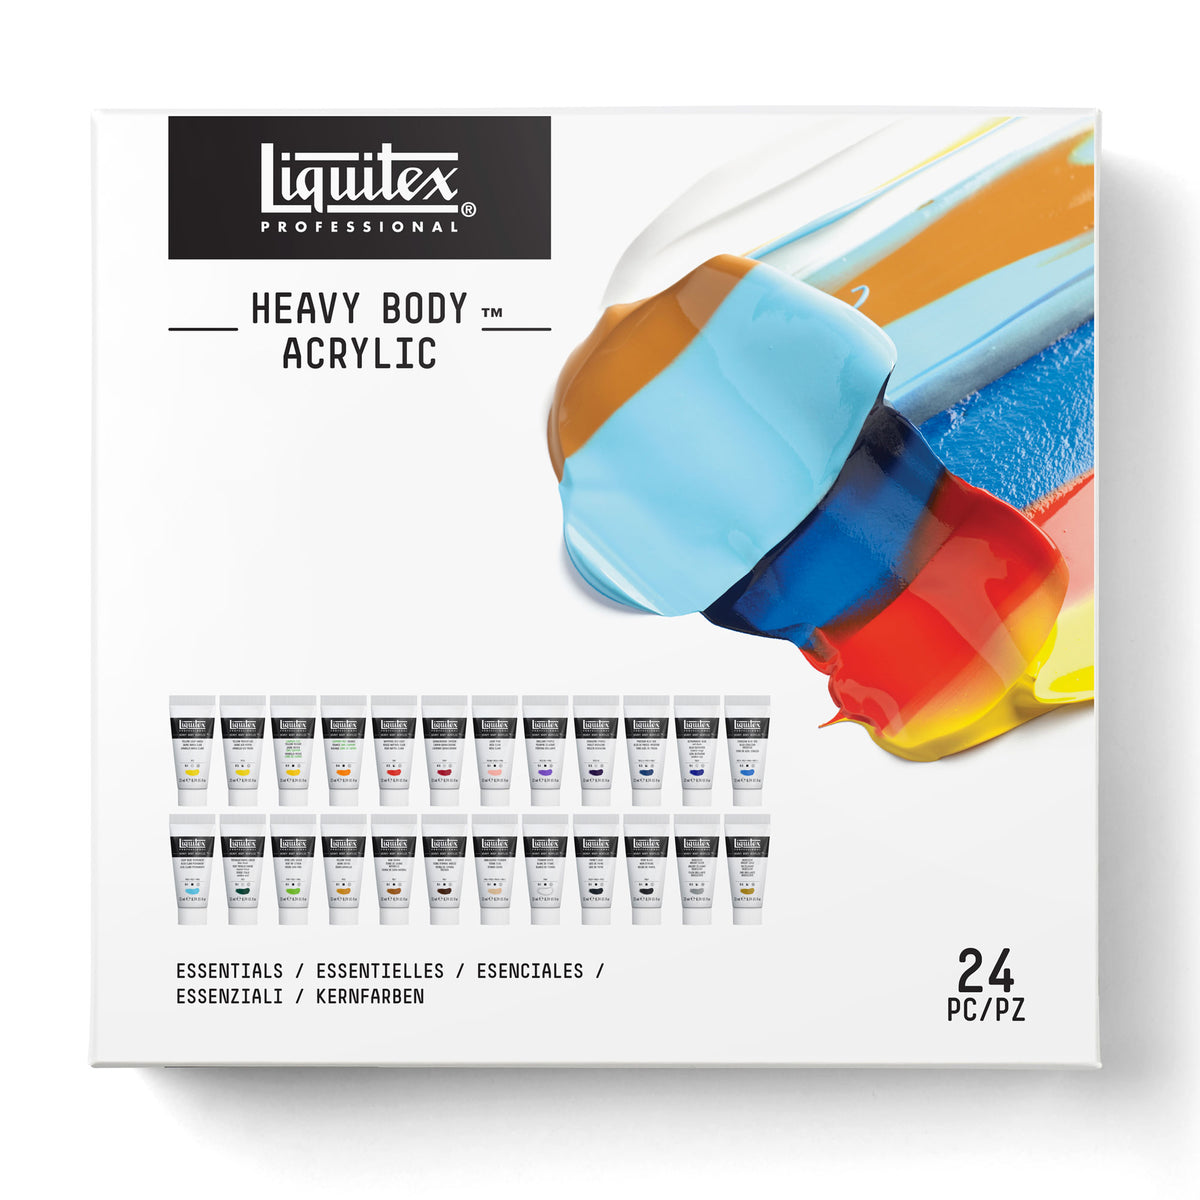 Liquitex Heavy Body Acrylic Essentials Set 24 x 22ml - Free Palette Knife Set of 5 (Normally £9.85)